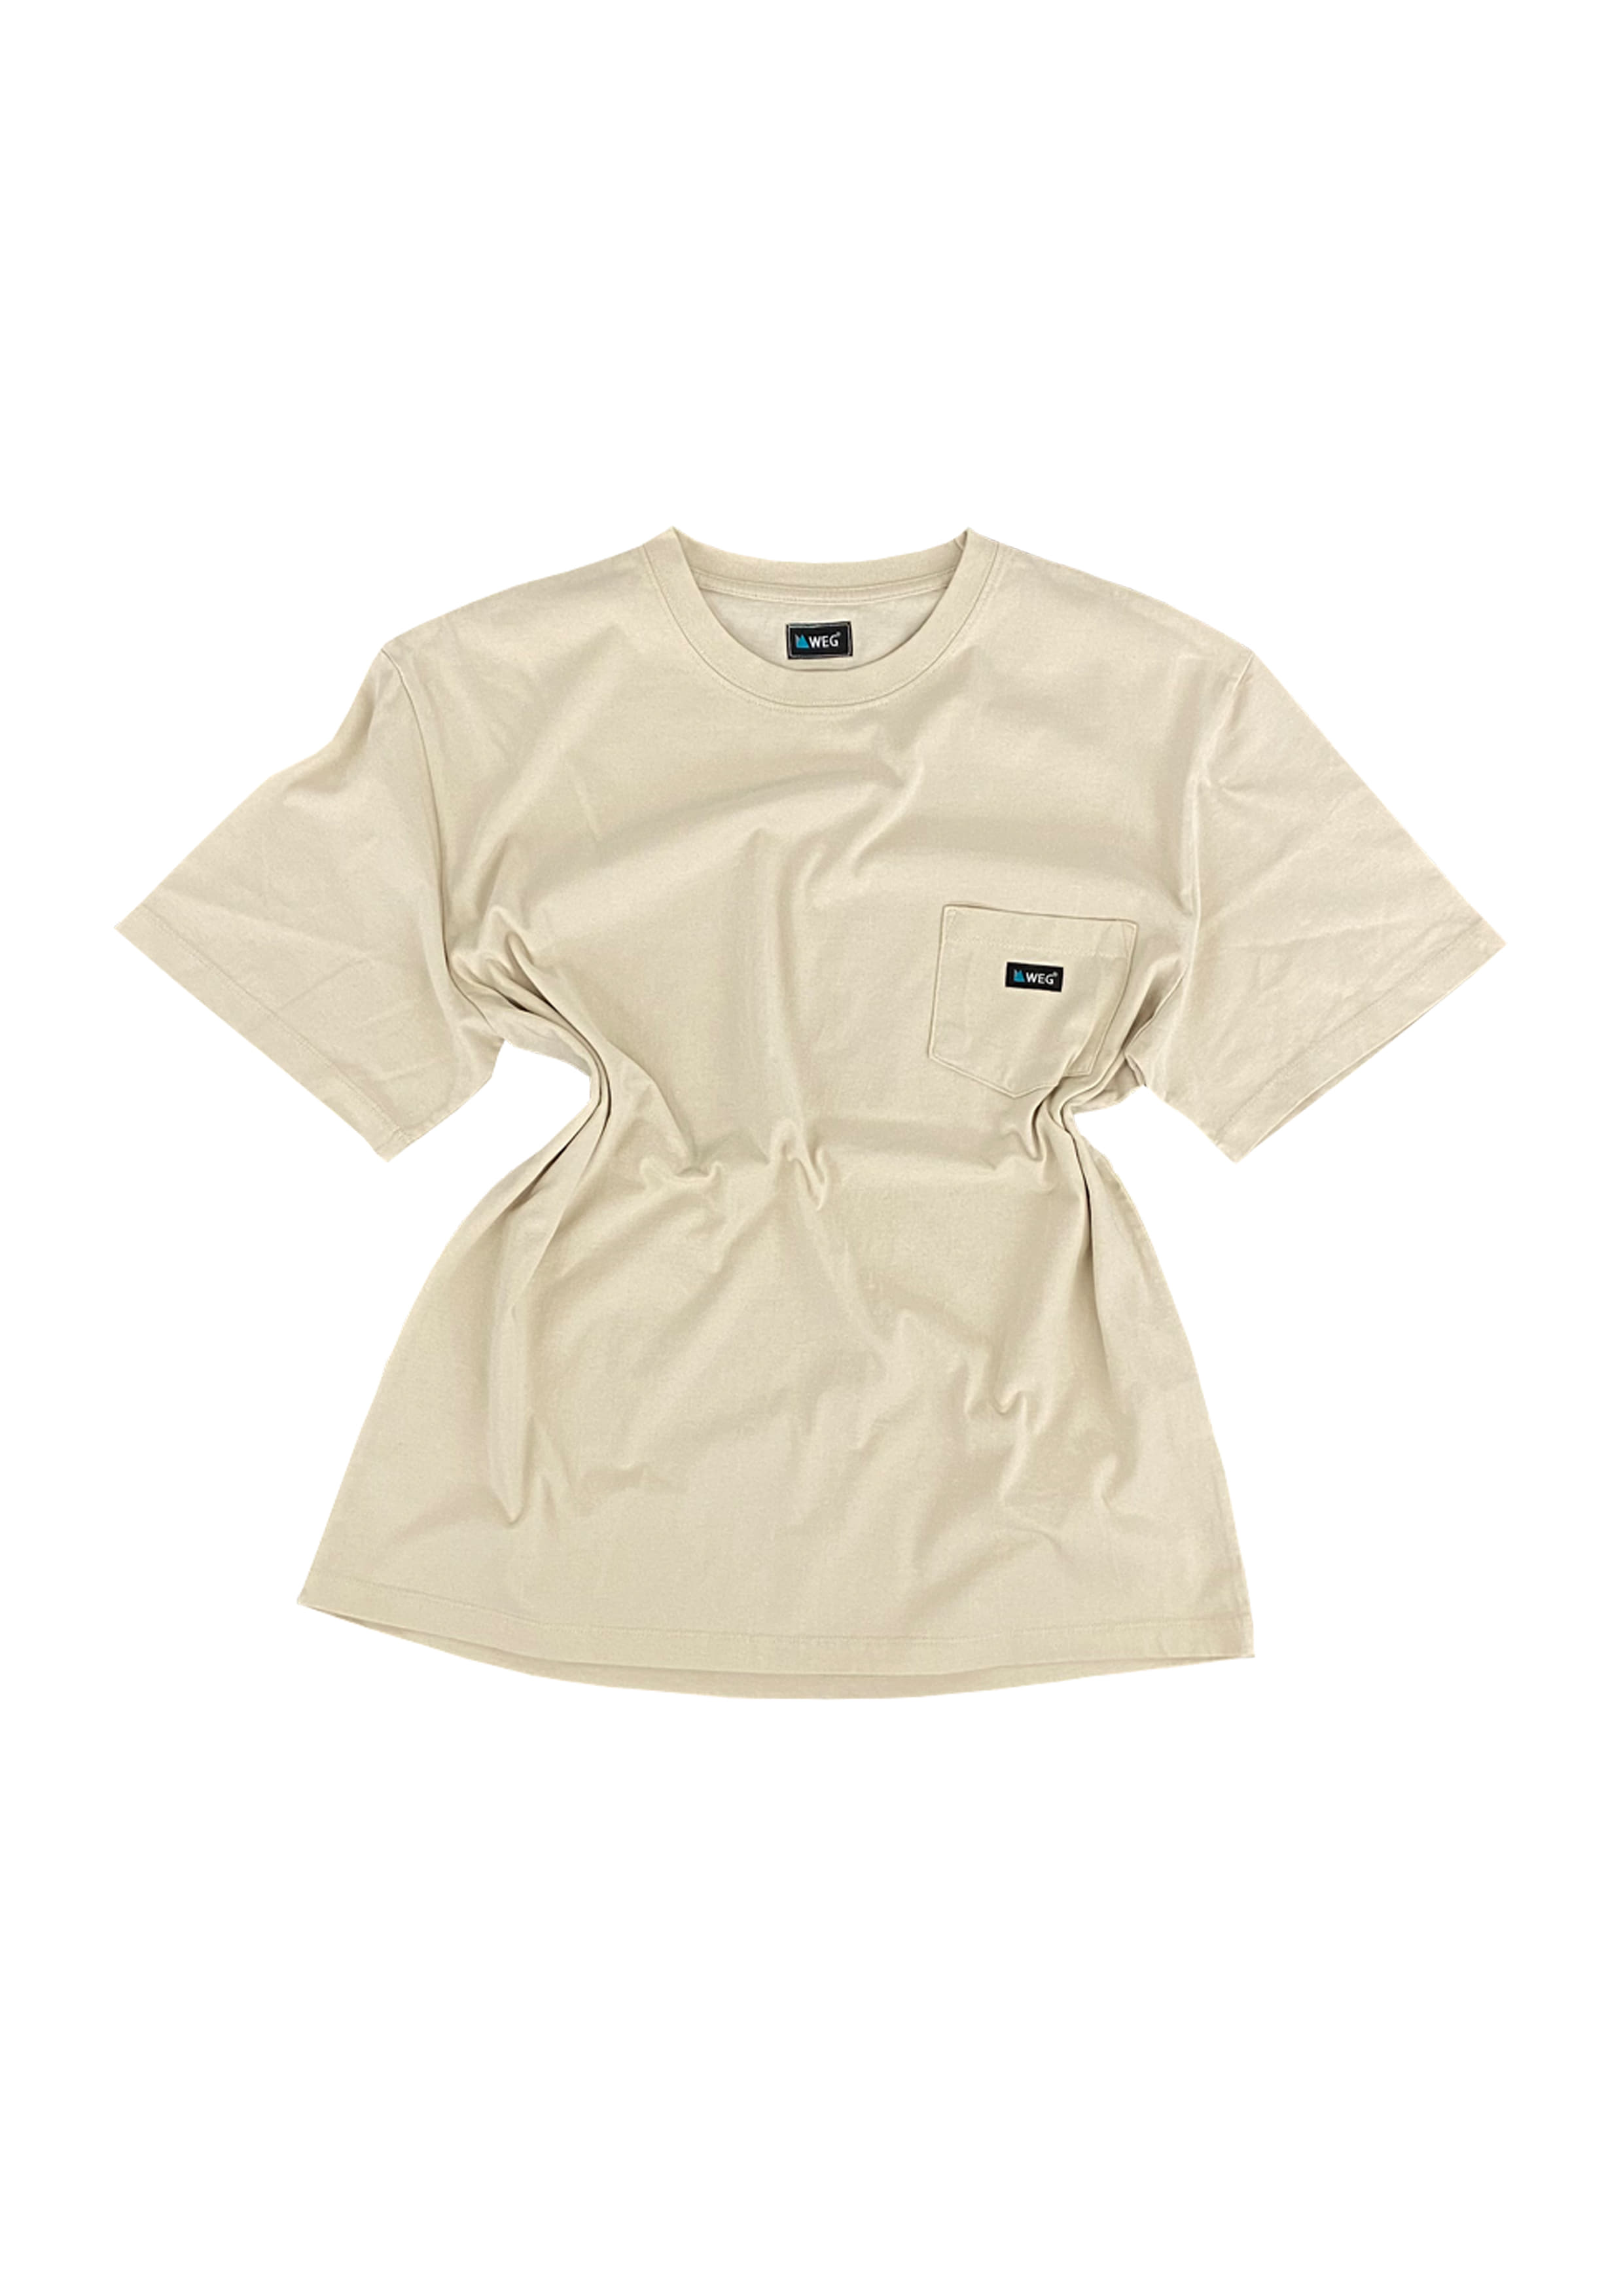 Pocket T-Shirt (Ivory)